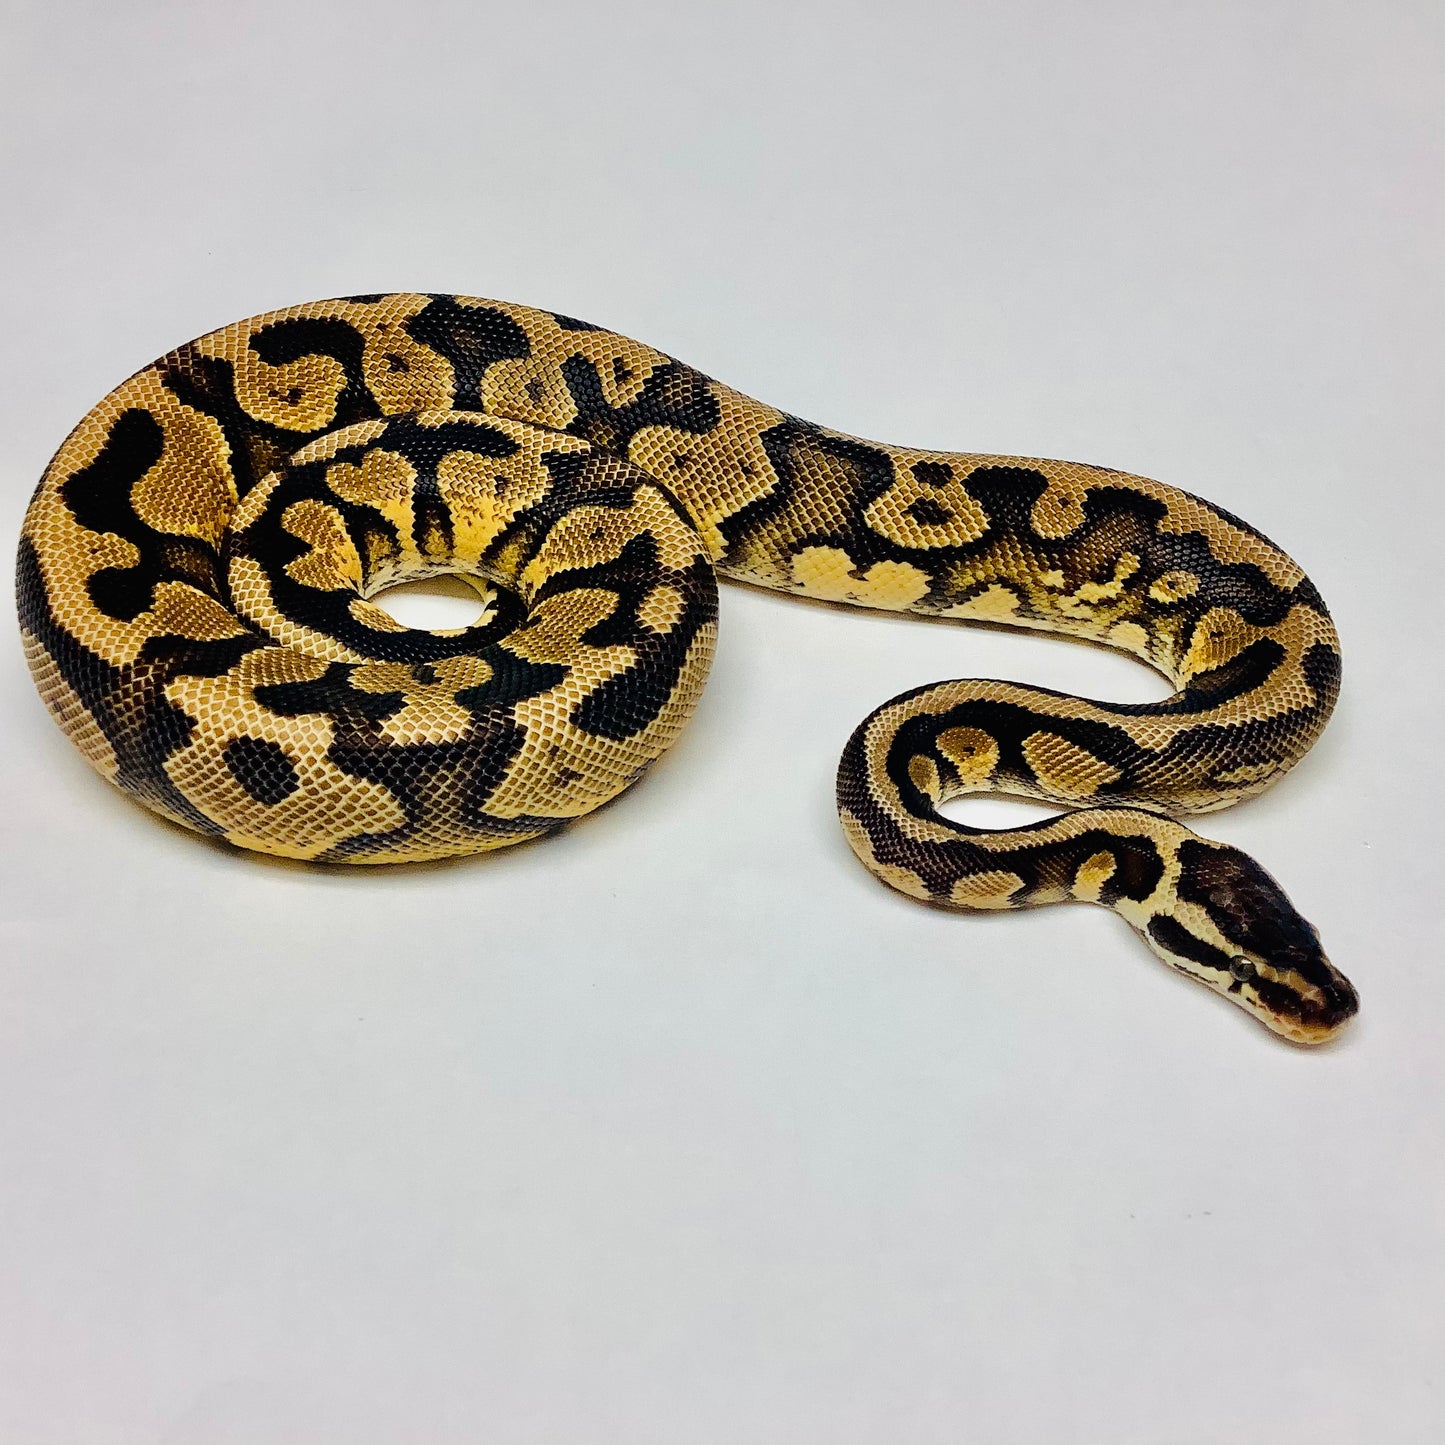 Pastel Red Stripe Yellowbelly Ball Python - Male #2020M01-1